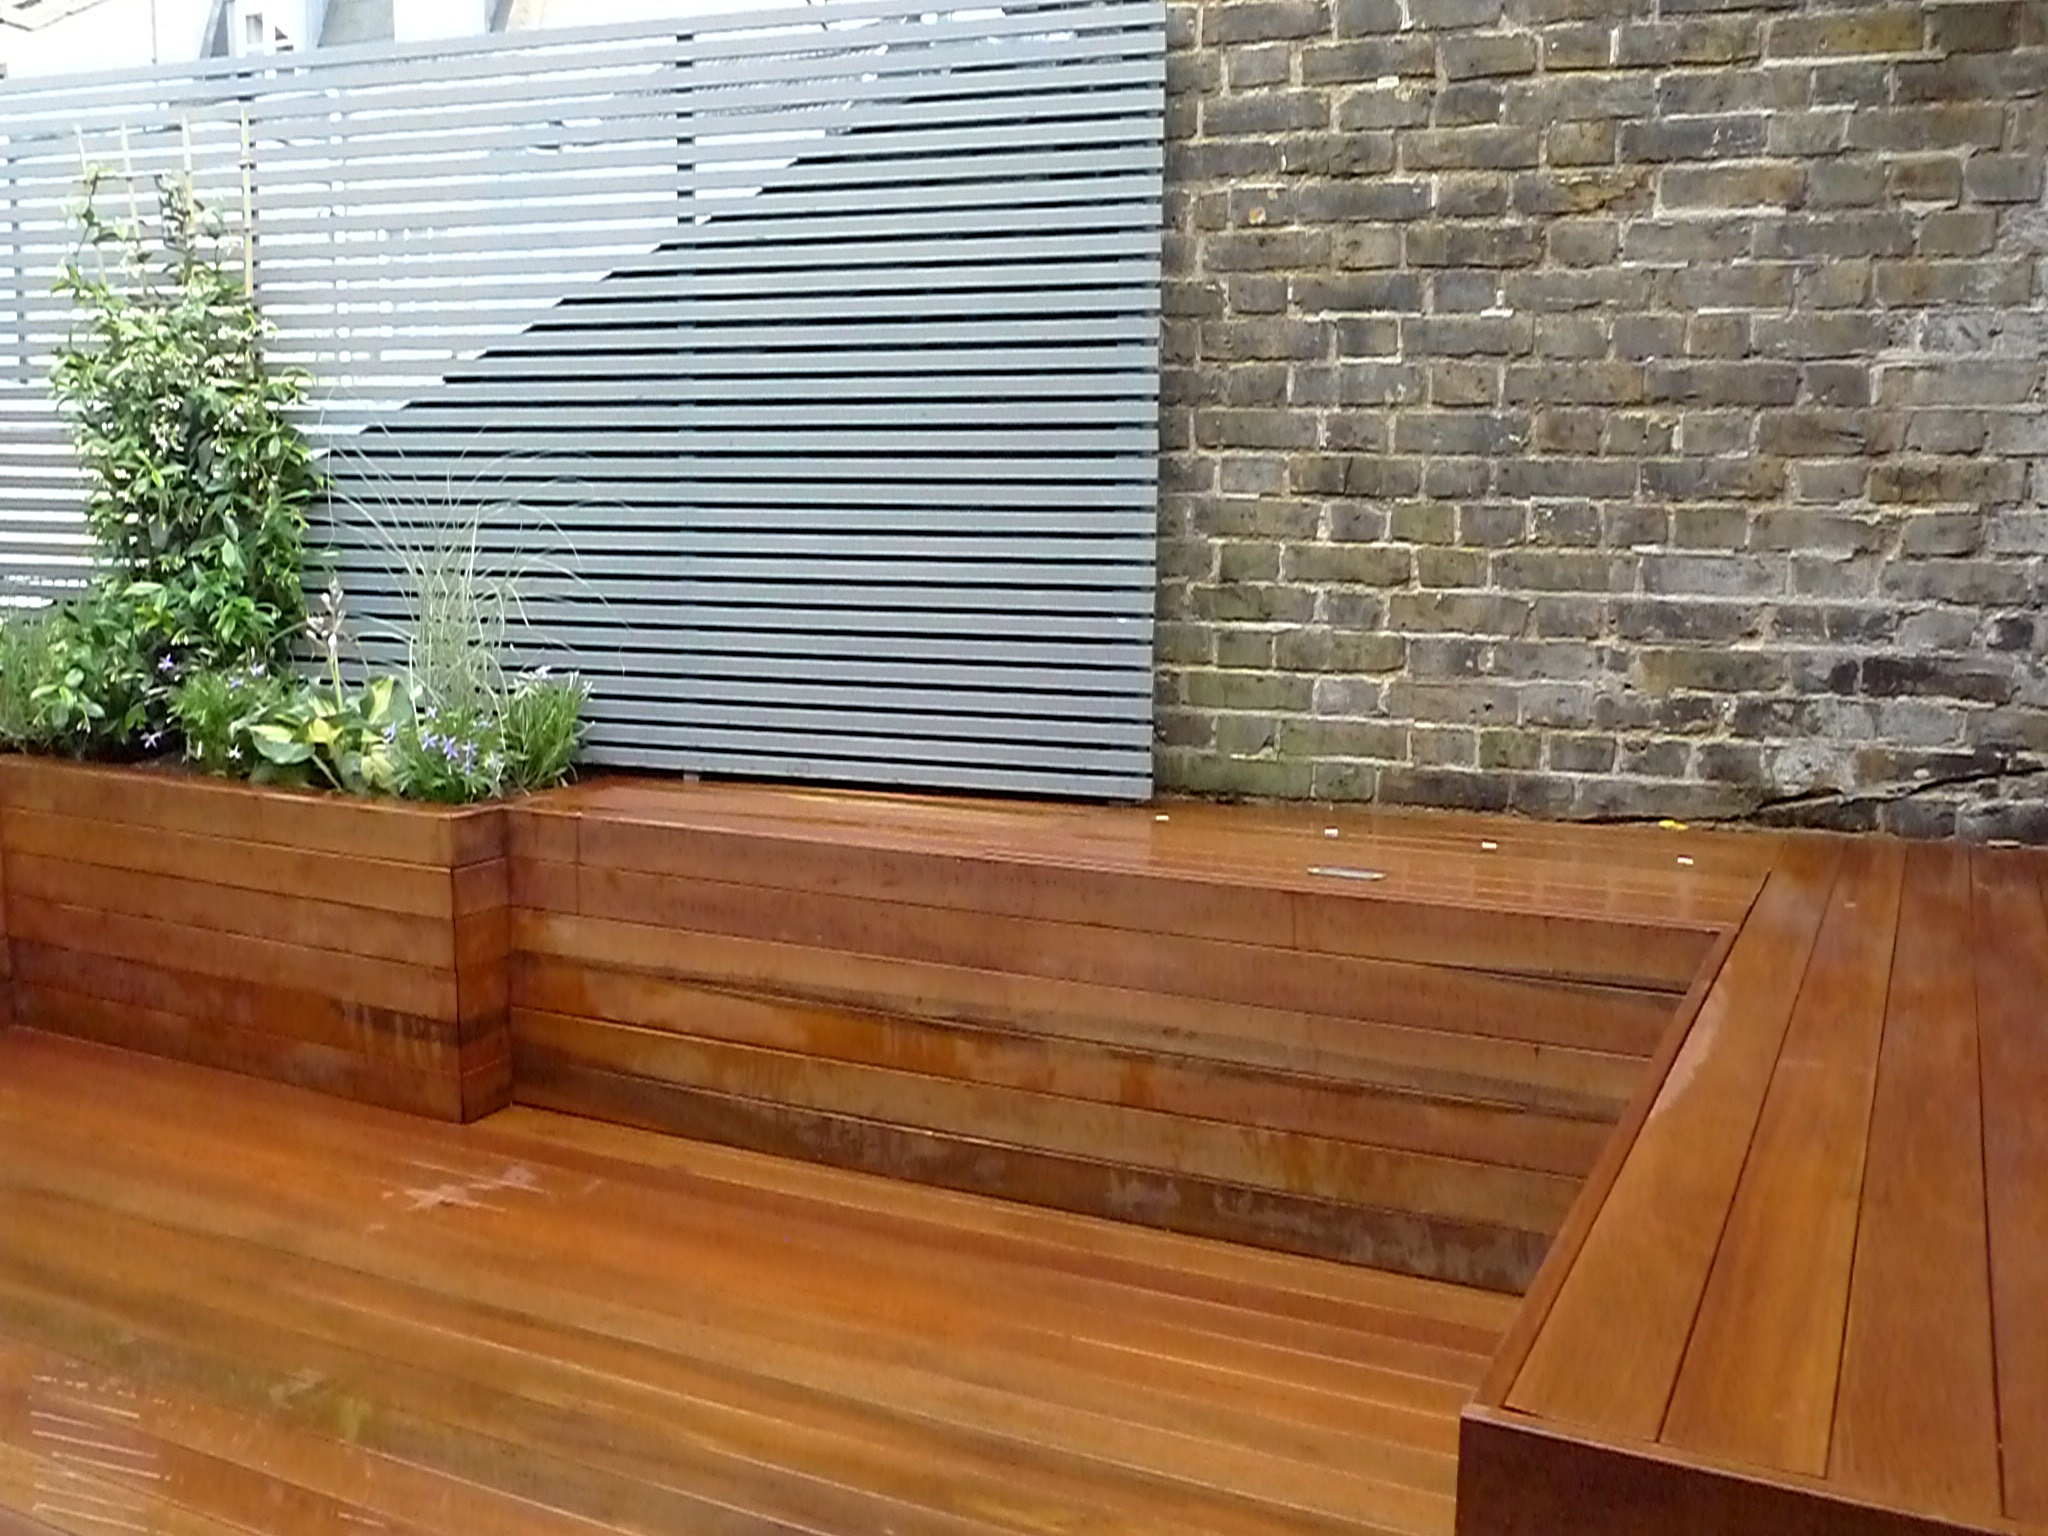 Floating bench brick garden wall planting Balham Clapham Battersea